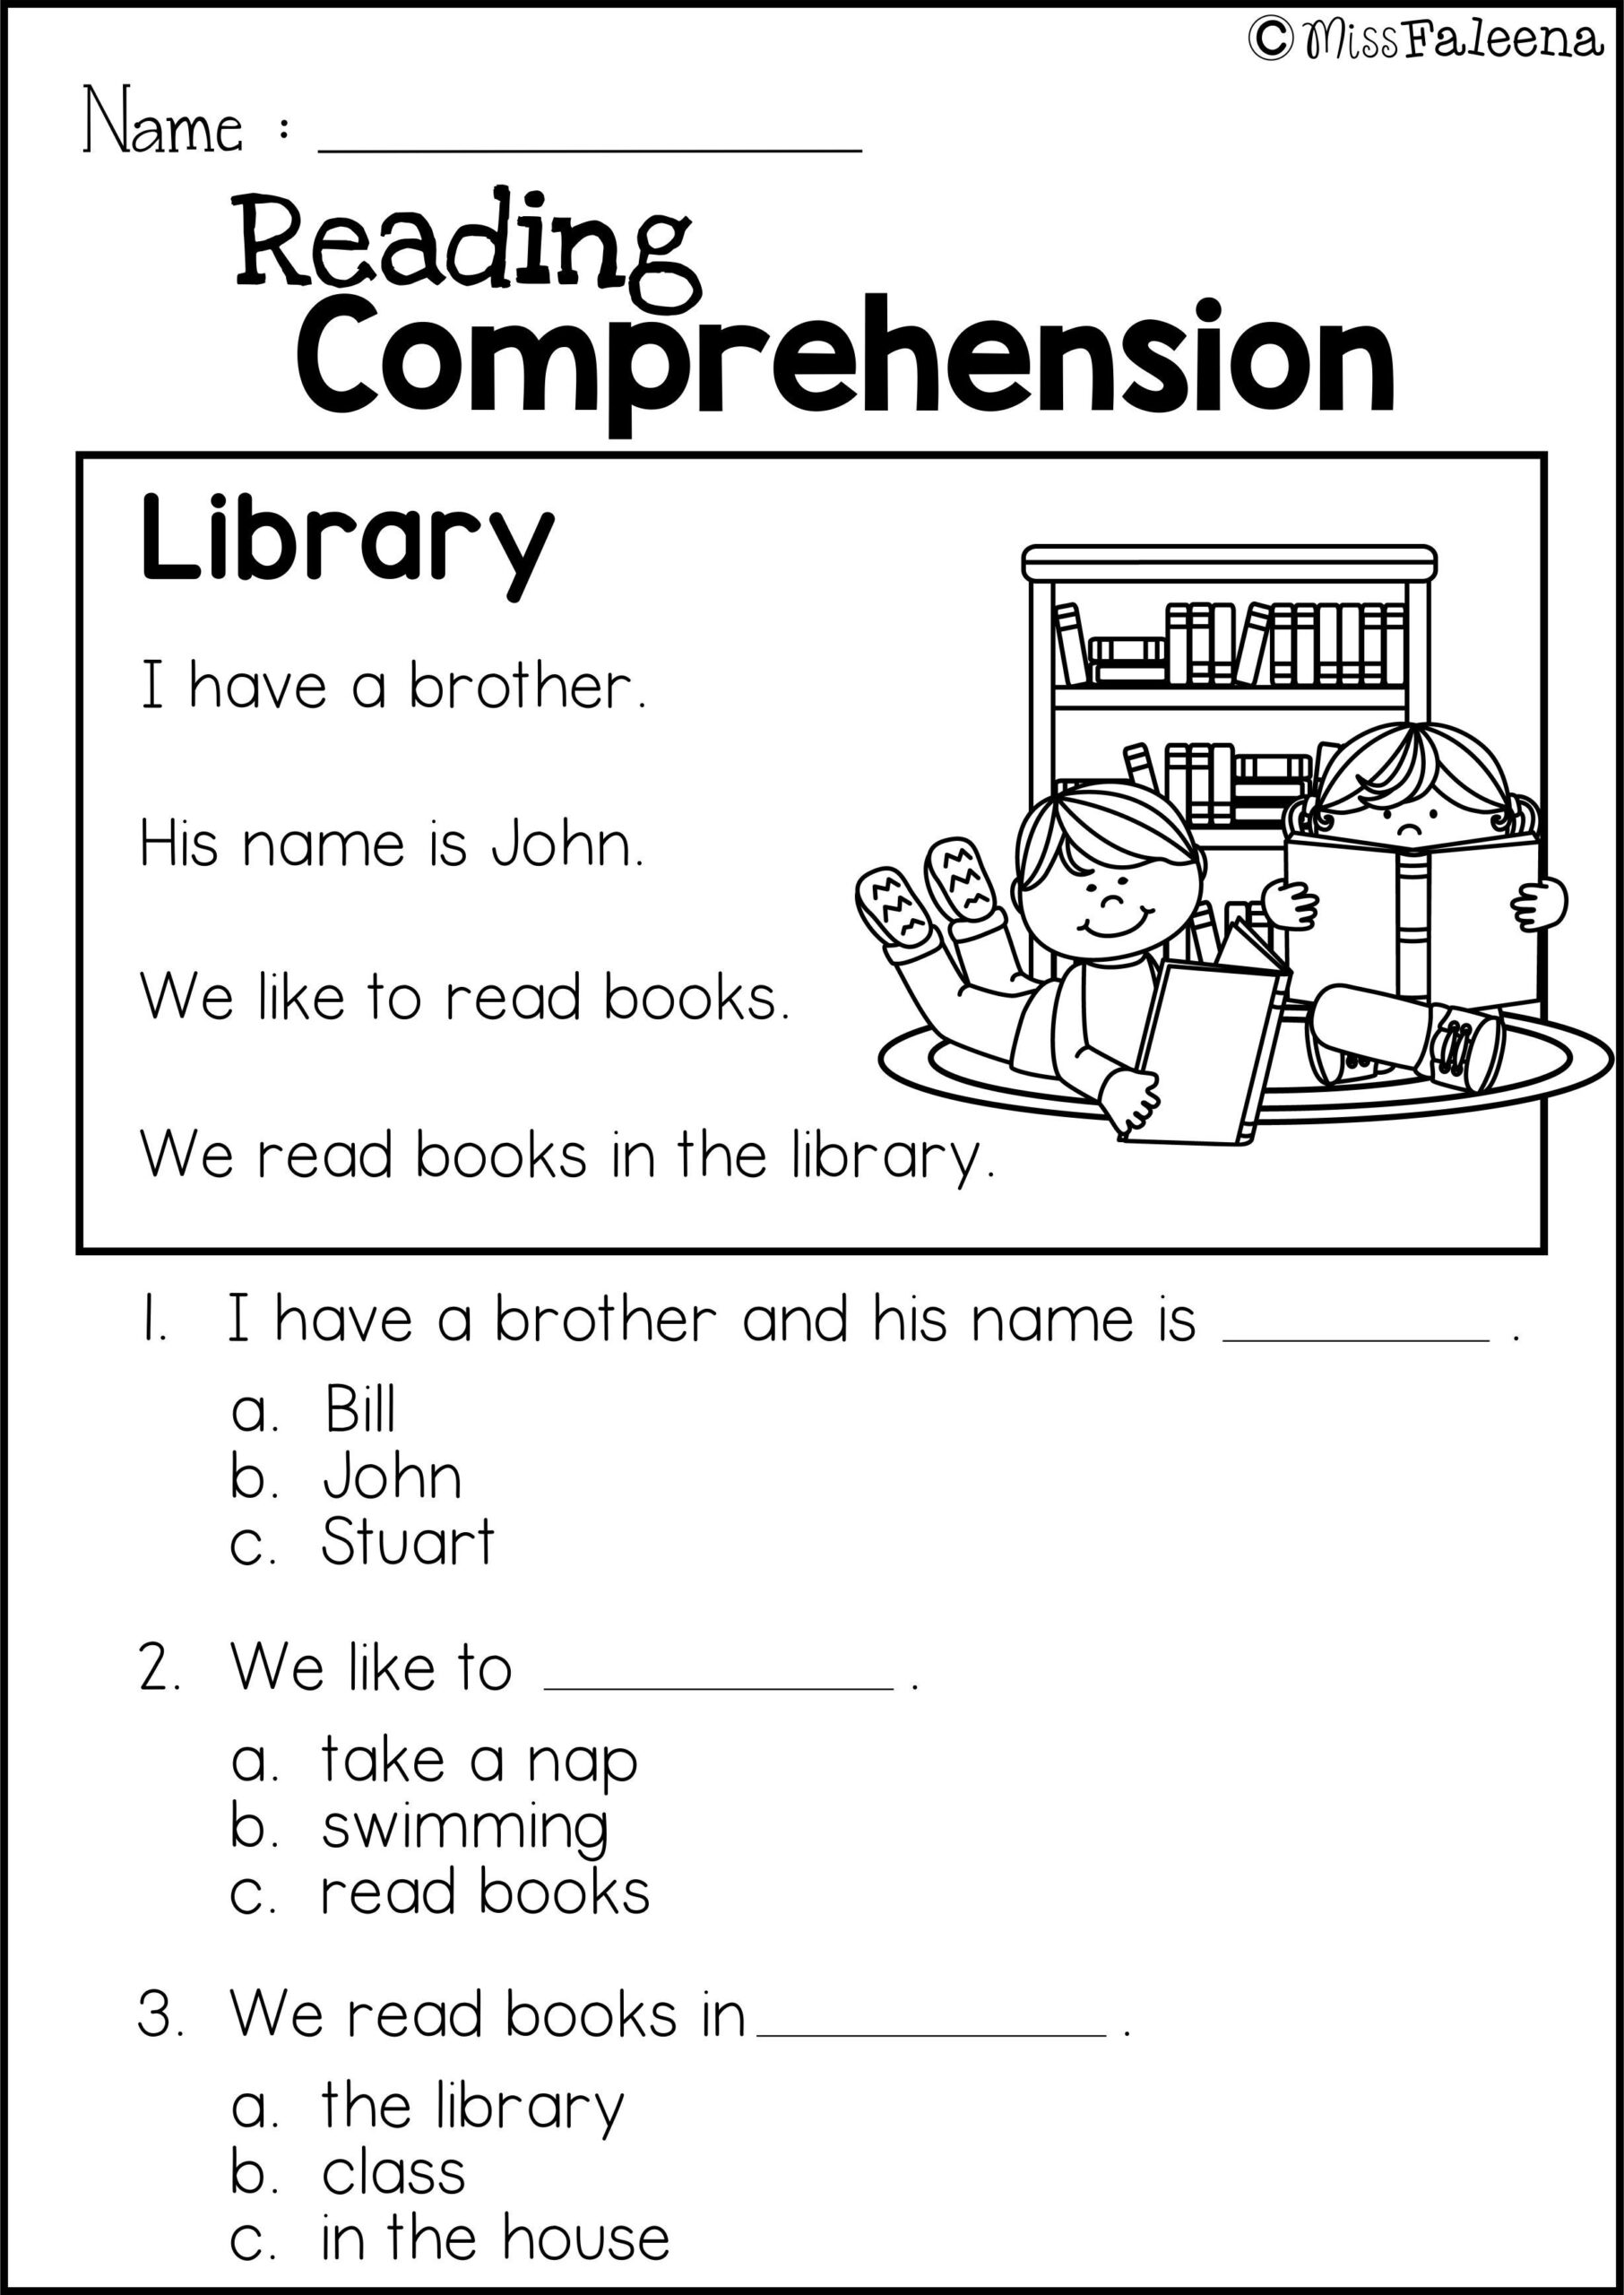 reading-comprehension-worksheets-free-1st-reading-comprehension-worksheets